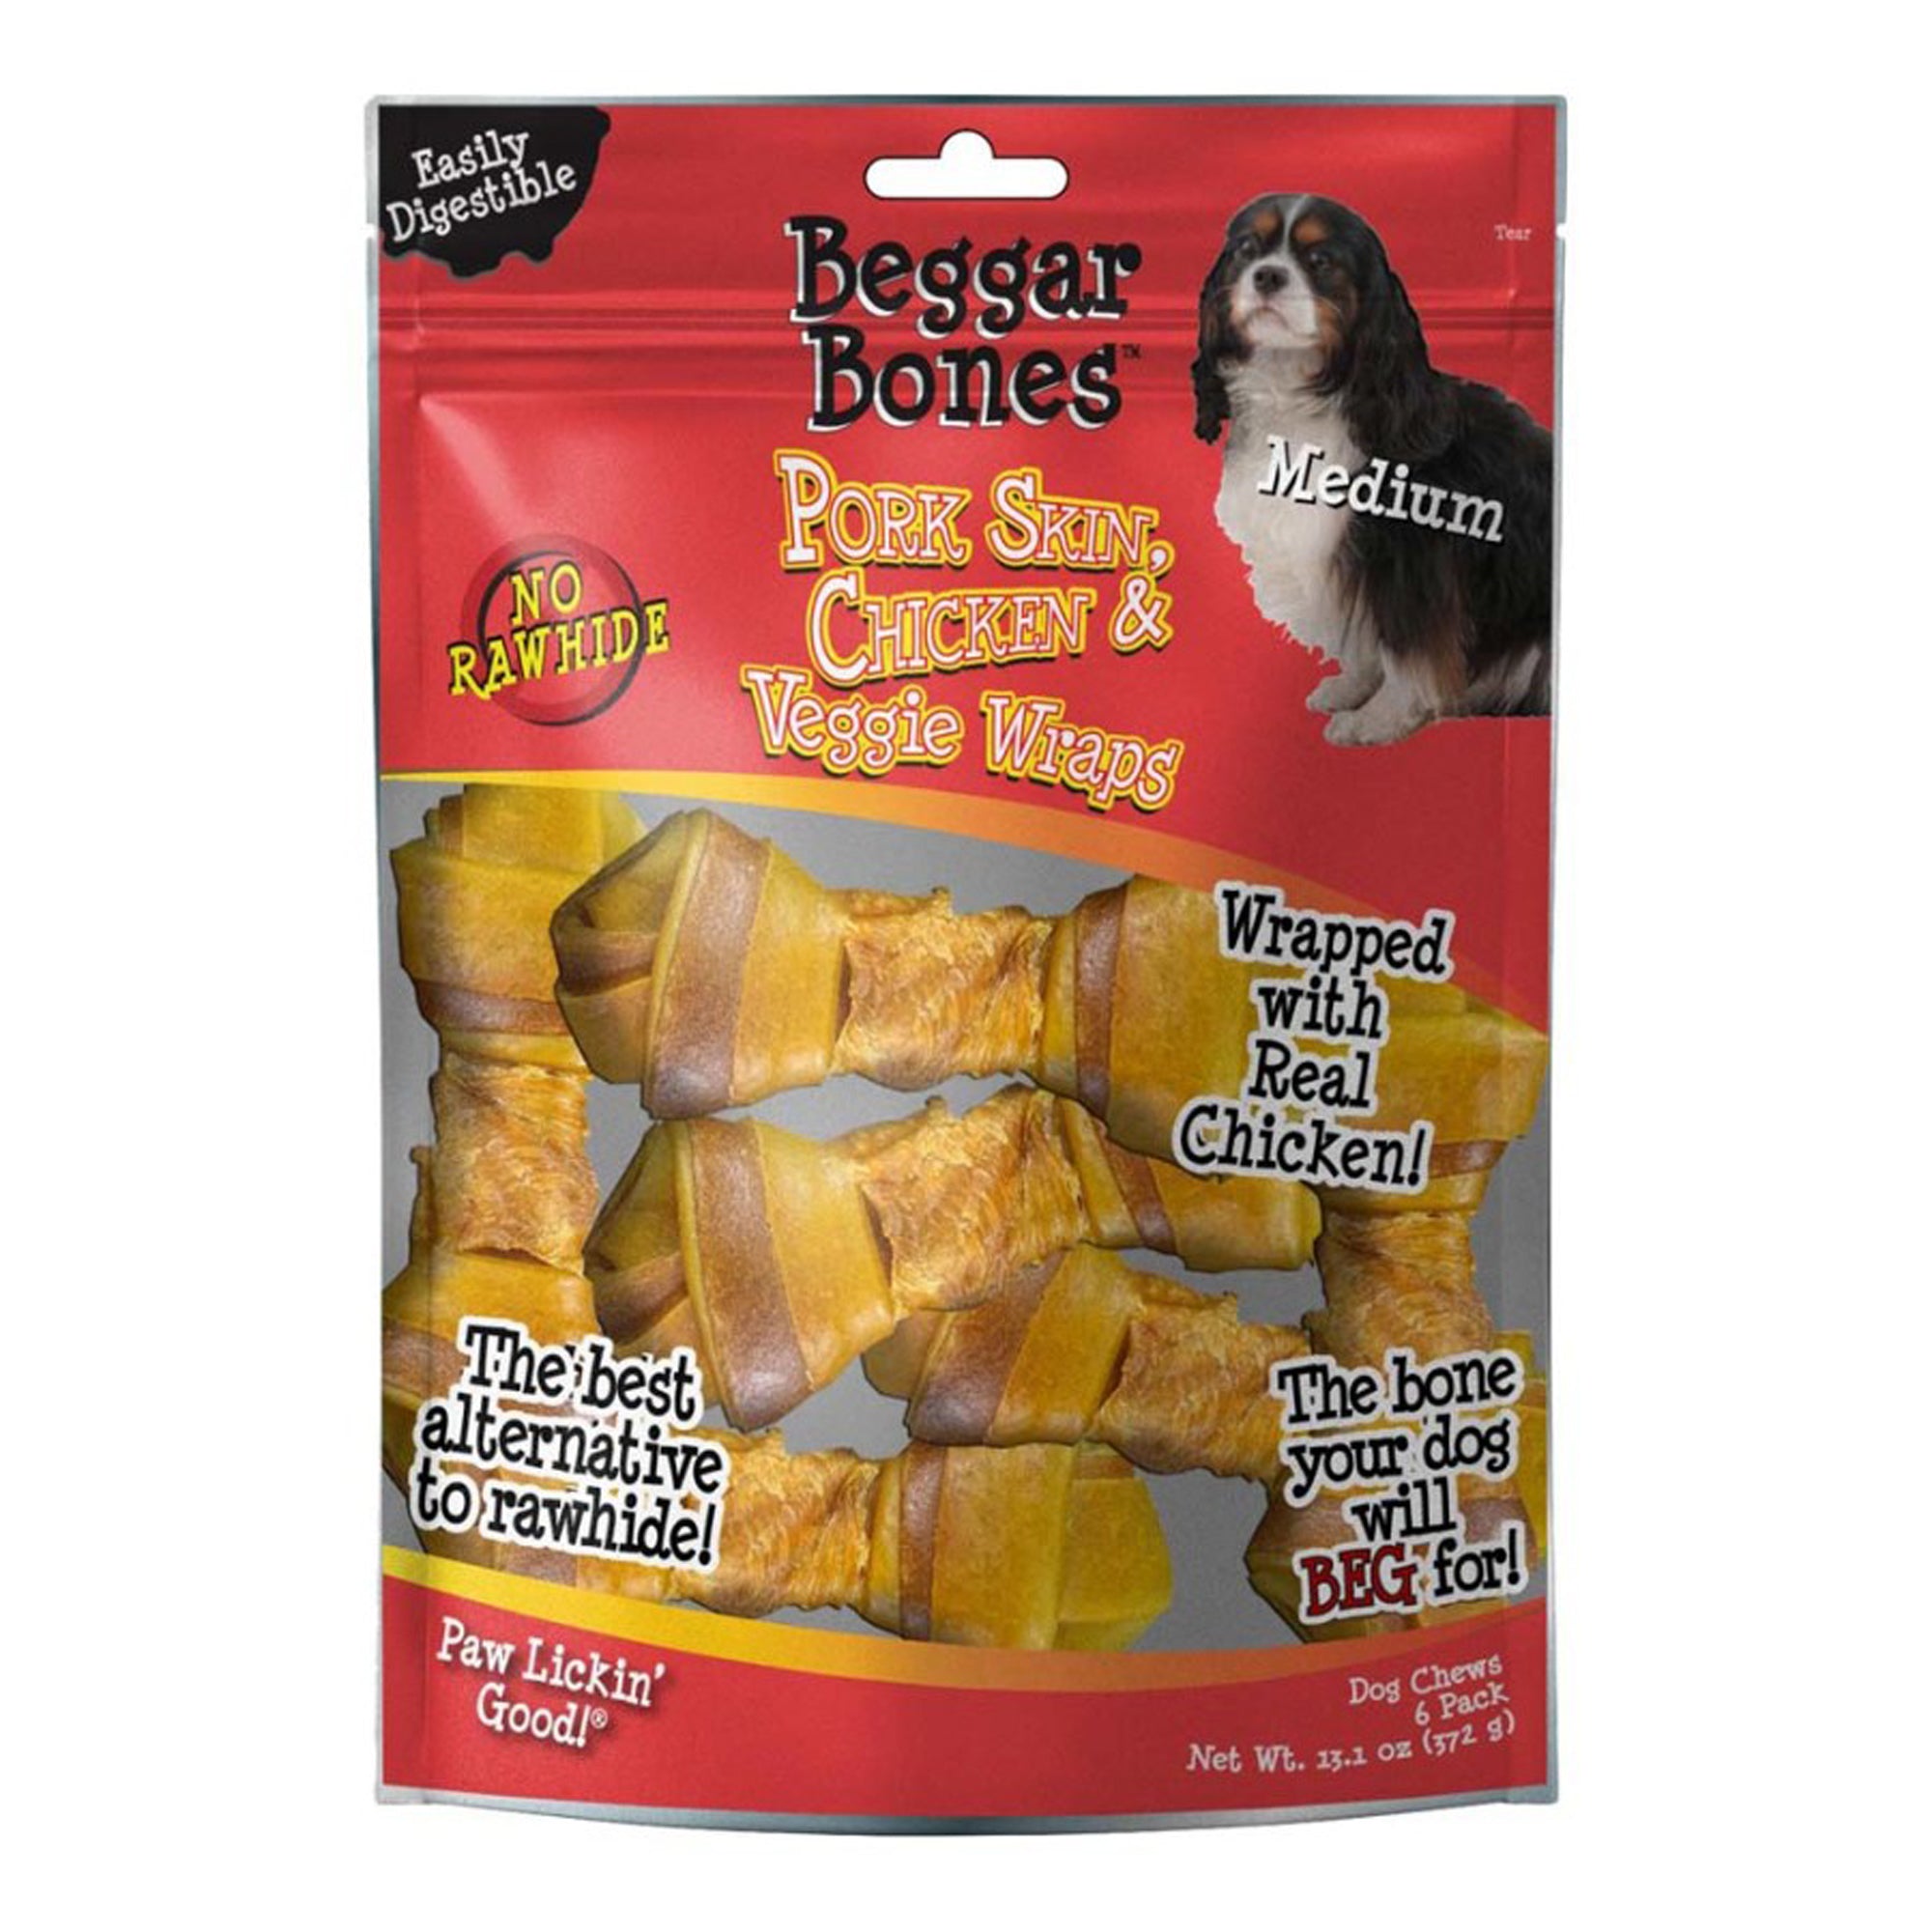 Savory Prime Beggar Bones Pork Skin; Chicken and Veggie Wraps Dog Treats 13.1 oz 6 Pack